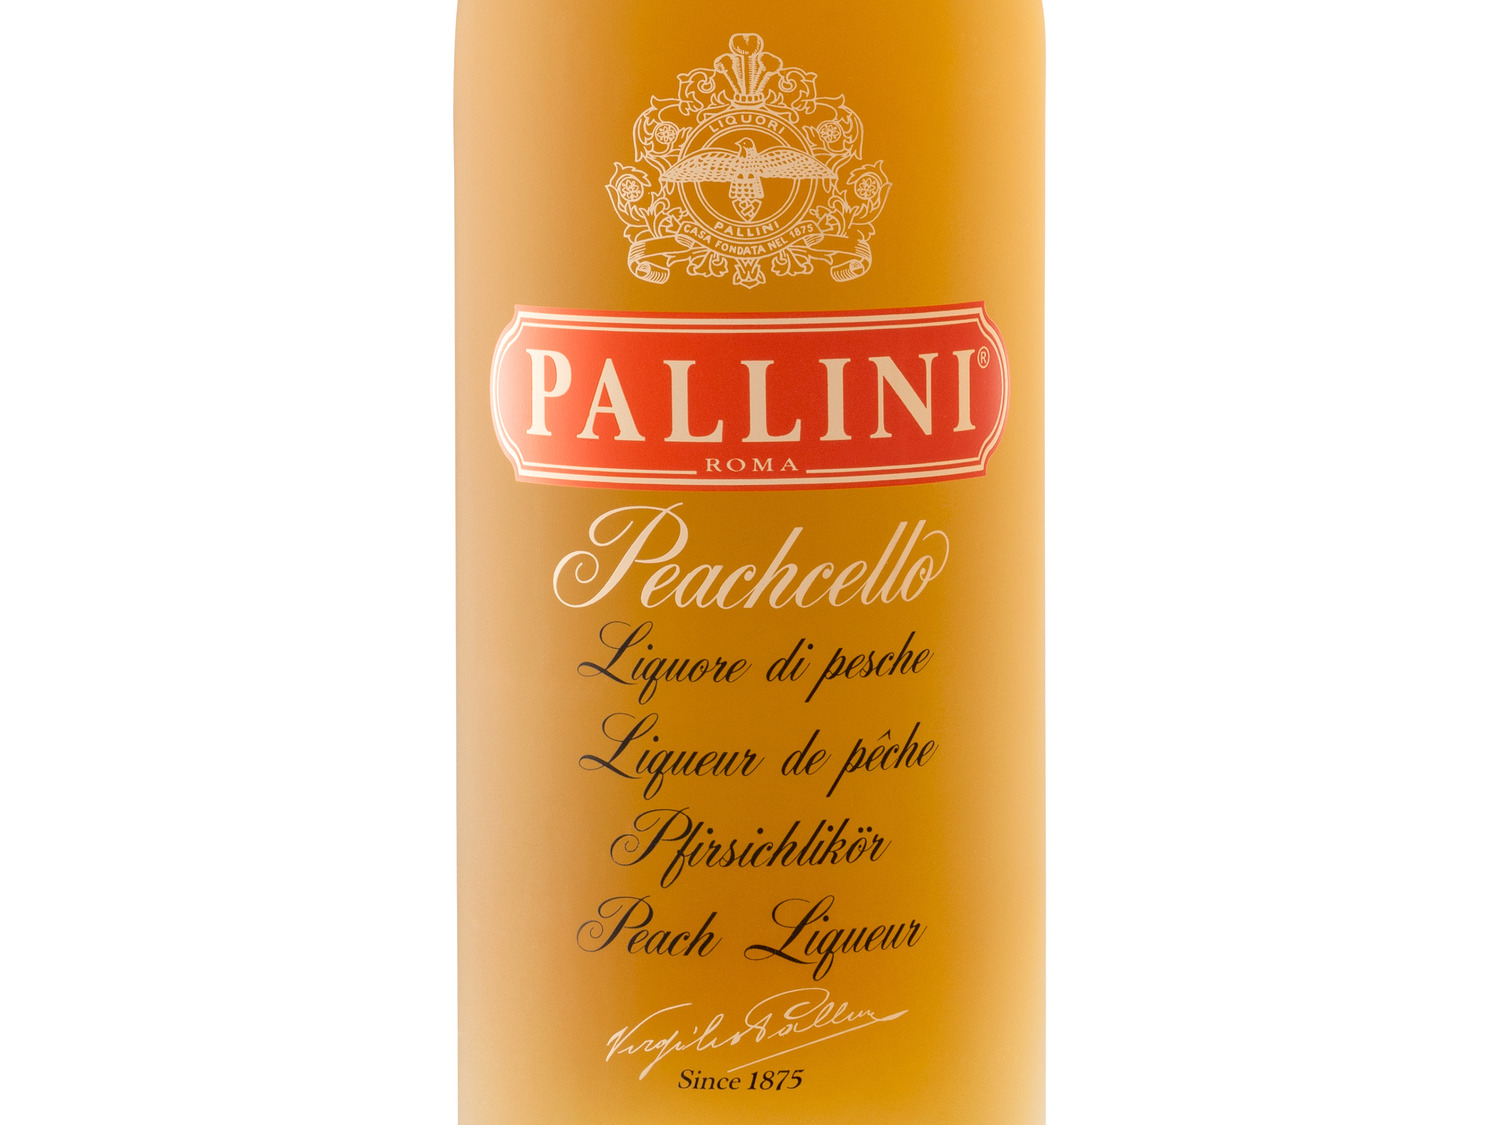 Pallini Peachcello Pfirsichlikör 26% Vol | LIDL